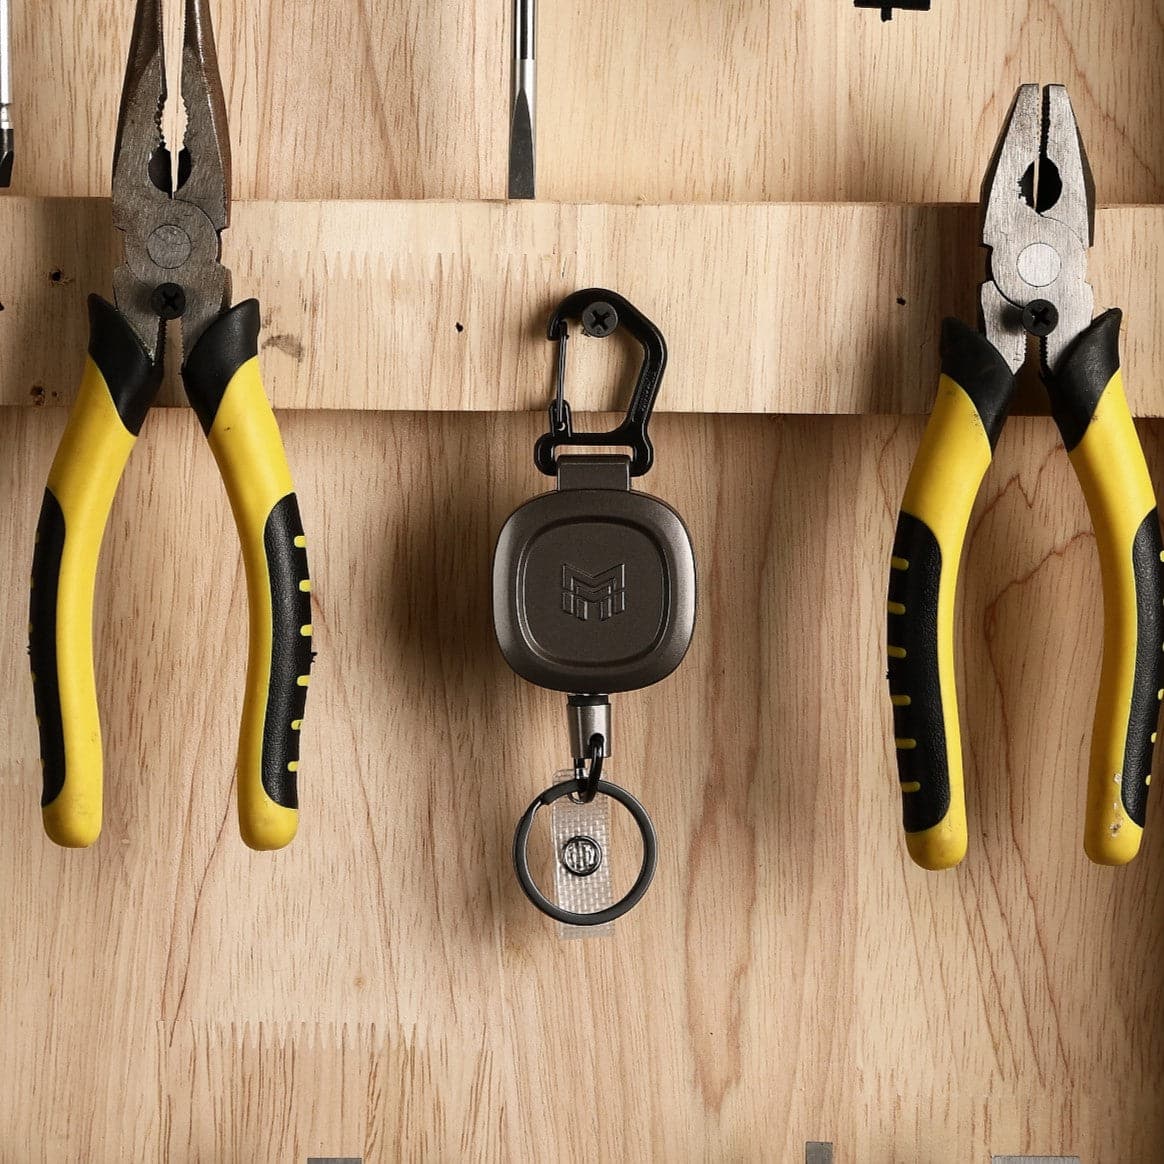 MNGARISTA-Retractable-Keychain-Carabiner-Holder, usage scenario, Wooden shelf, screwdriver, wrench, pliers